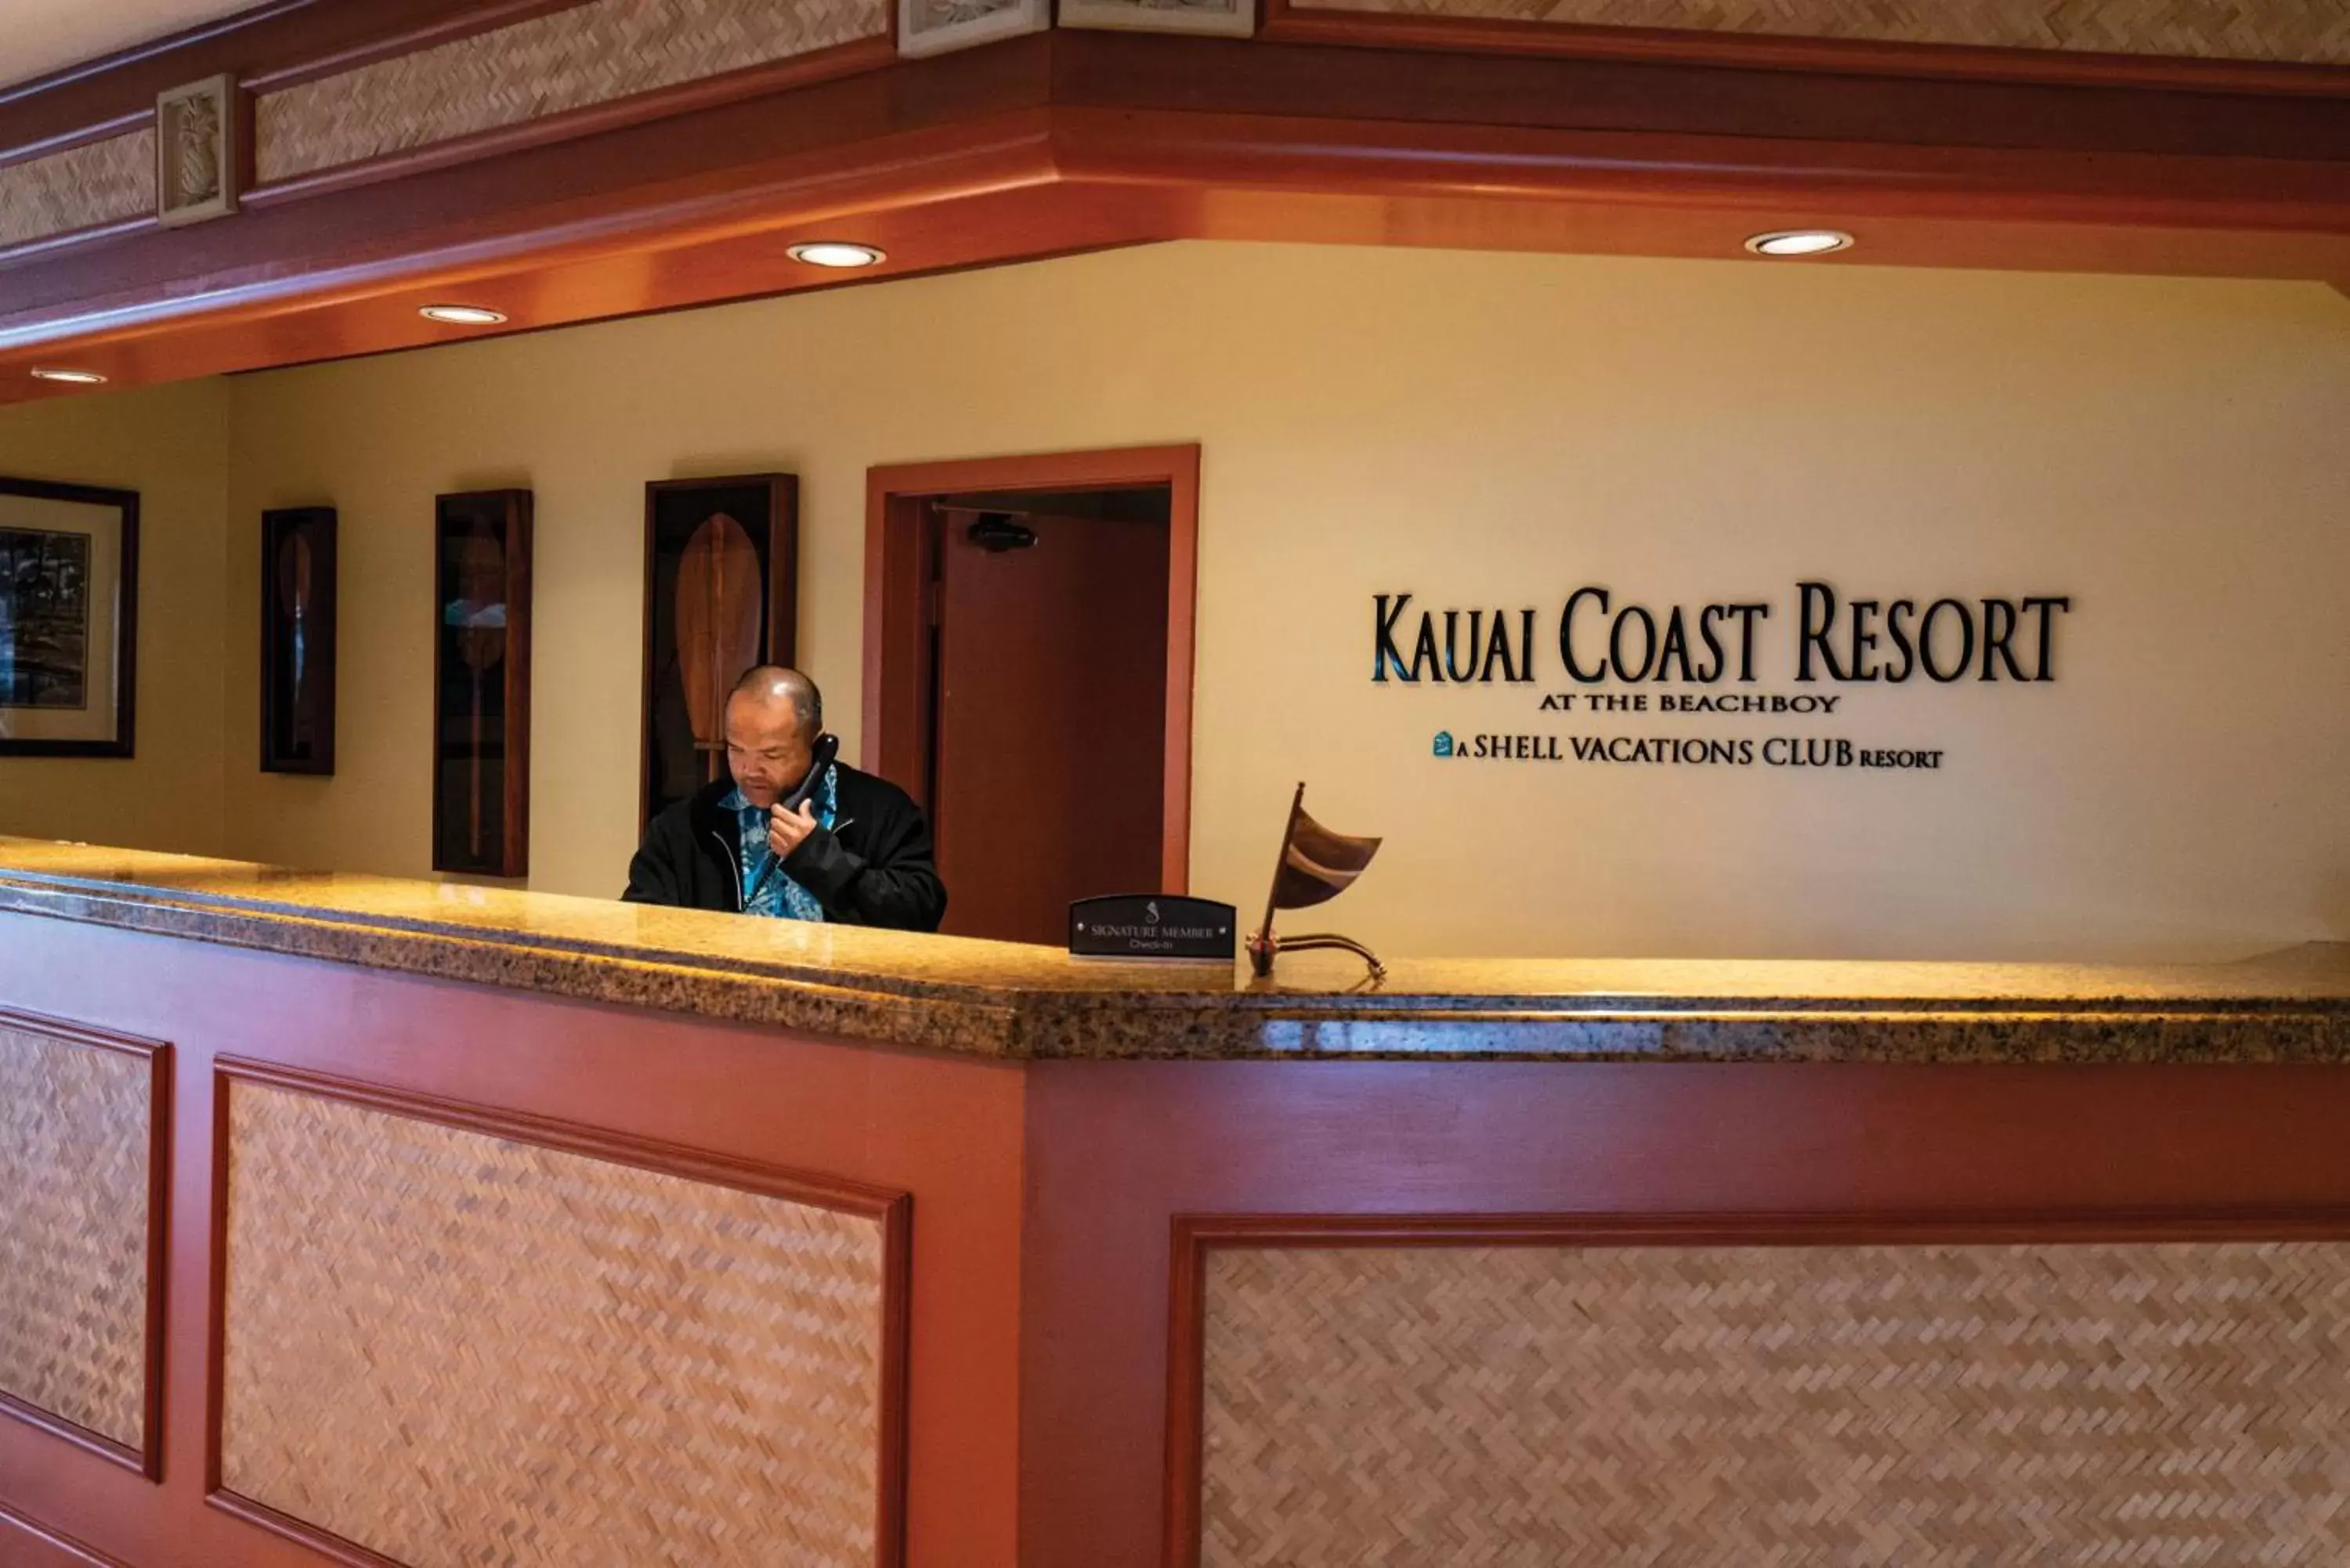 Lobby or reception in Kauai Coast Resort at the Beach Boy